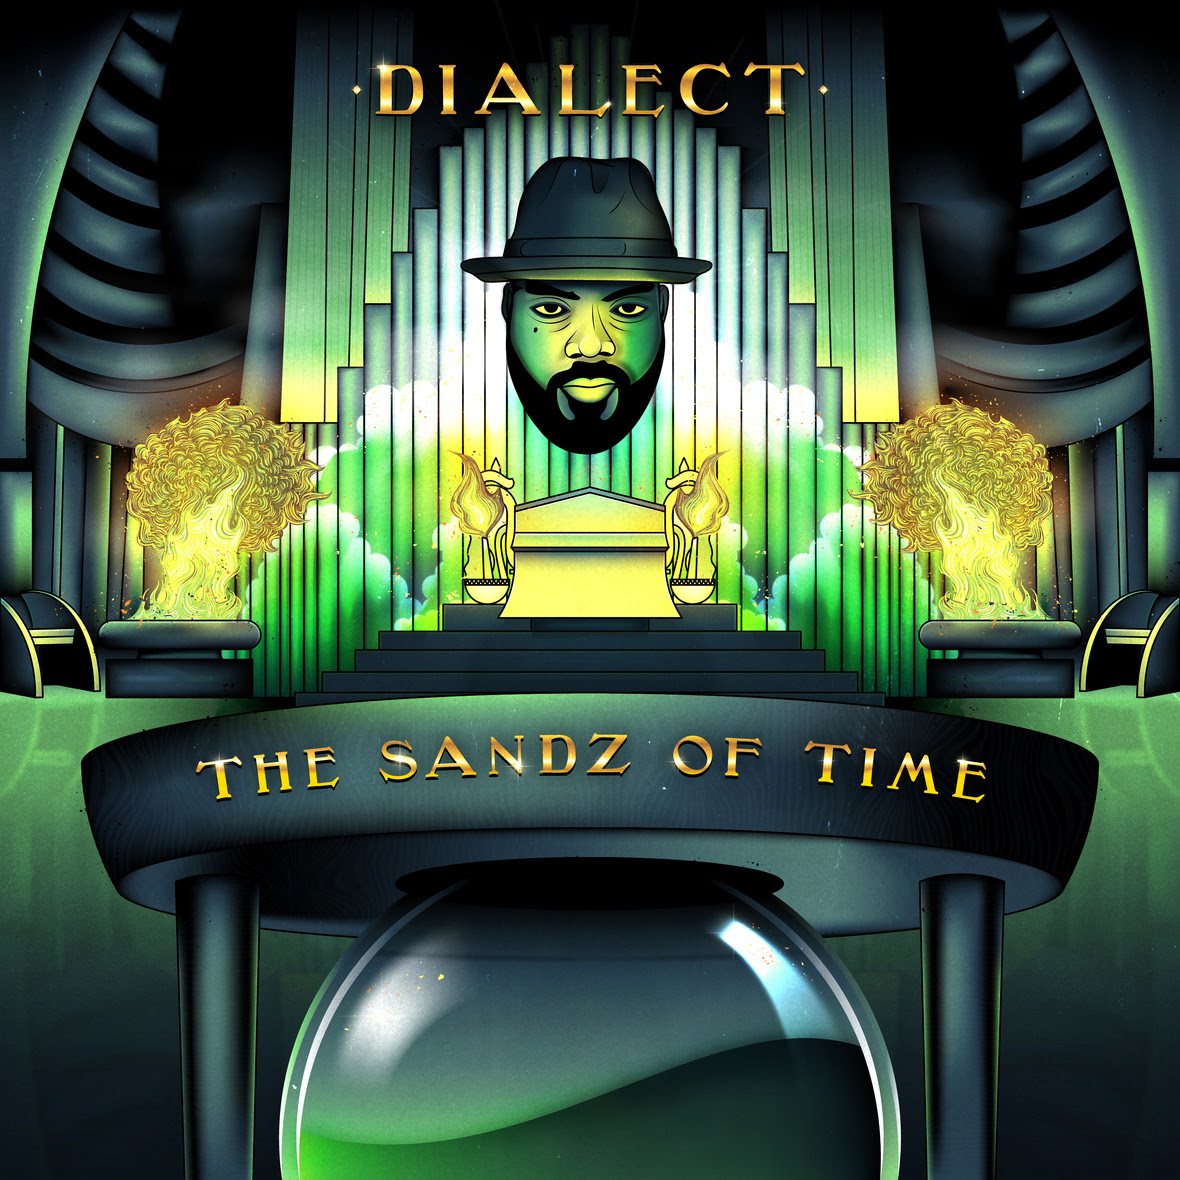 Dialect - "The Sandz of Time" (Instrumental Album)